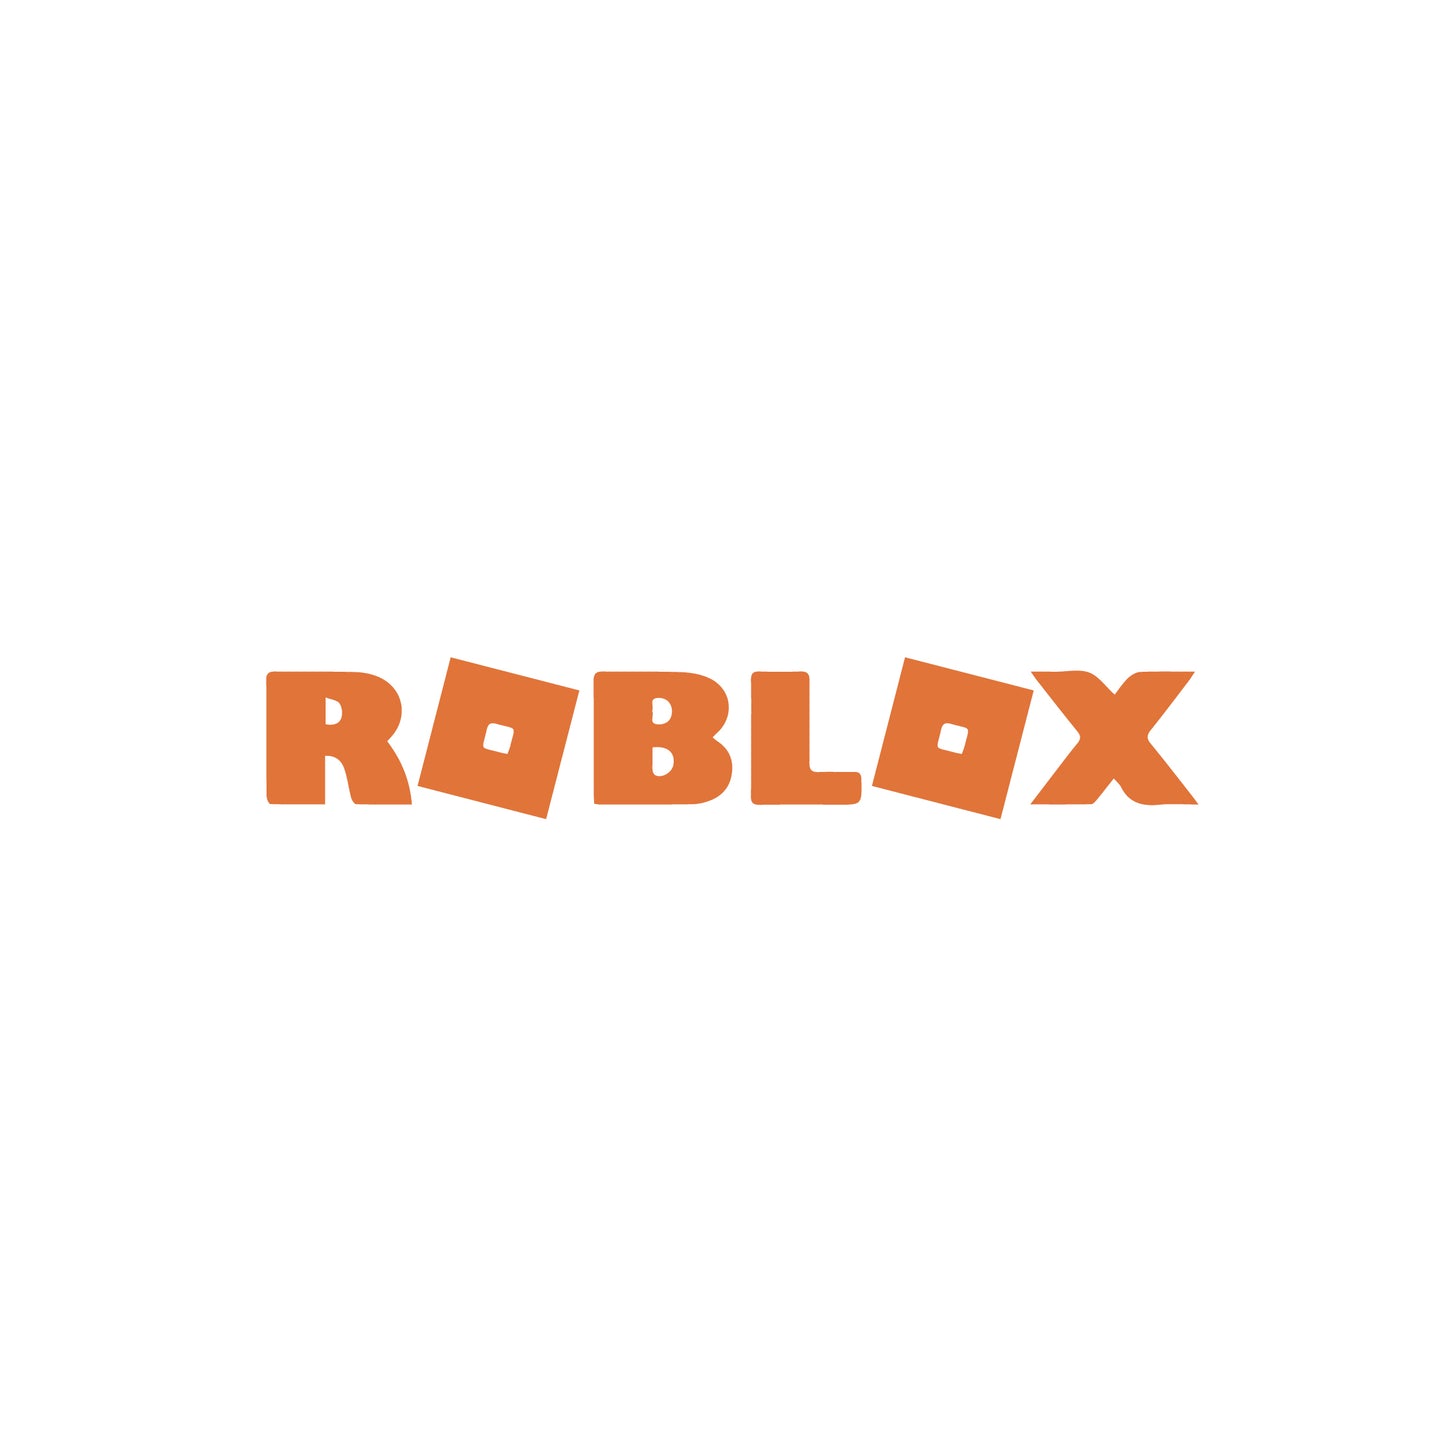 Roblox logo gamer bedroom wall decal sticker design